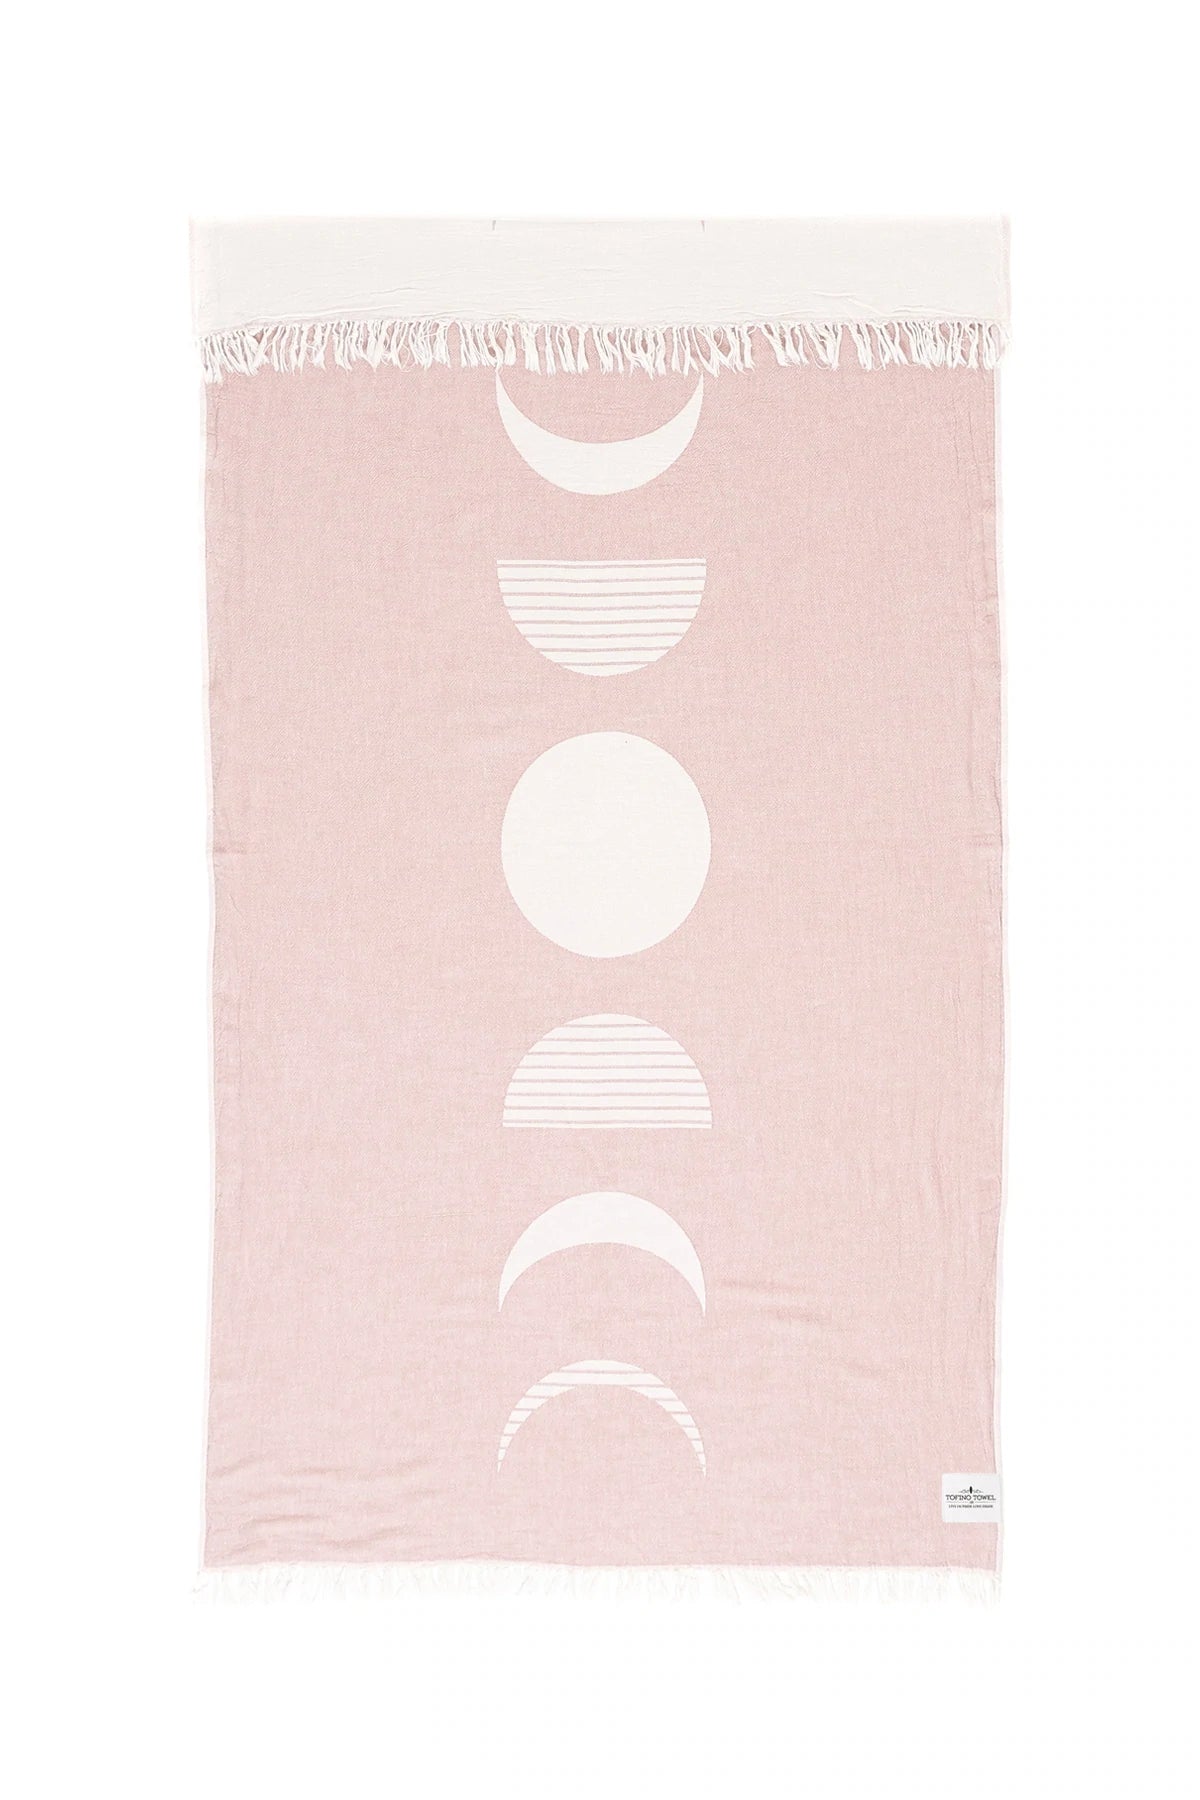 Tofino Towel Moon Phase // Rosewood - Ulla-La Boutique